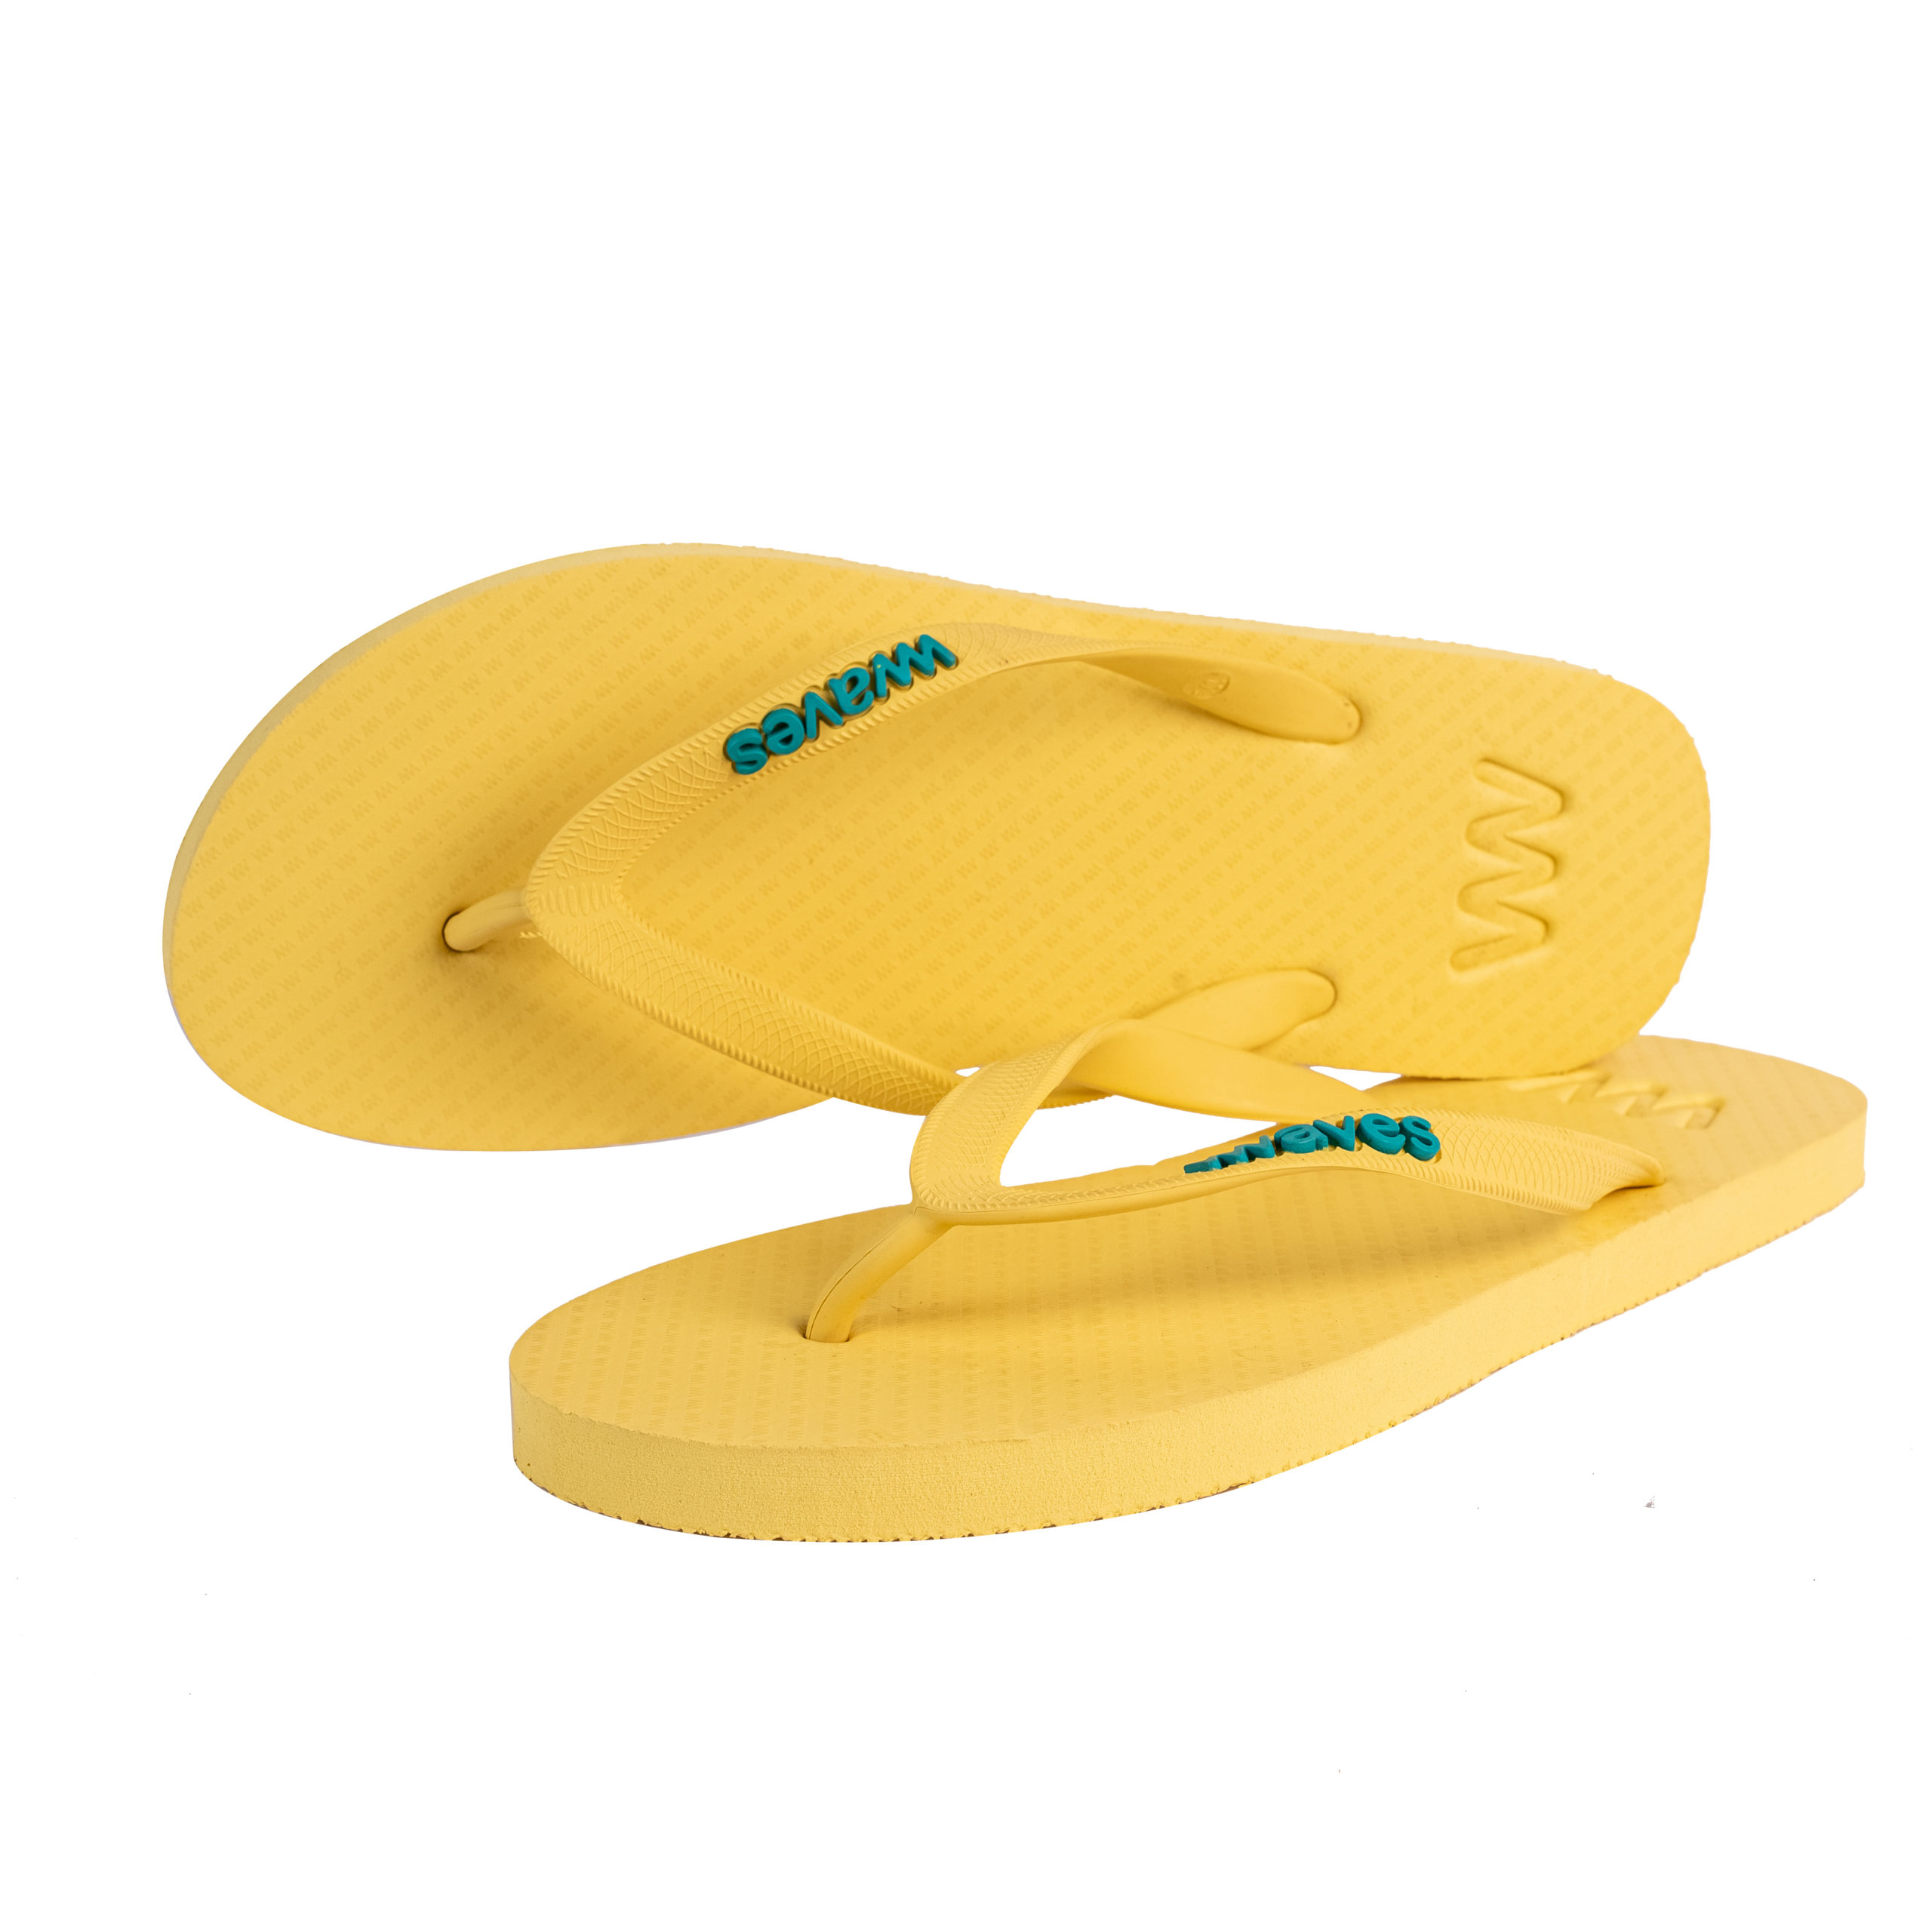 Natural Rubber Flip Flop - Yellow - Waves Flip Flops UK